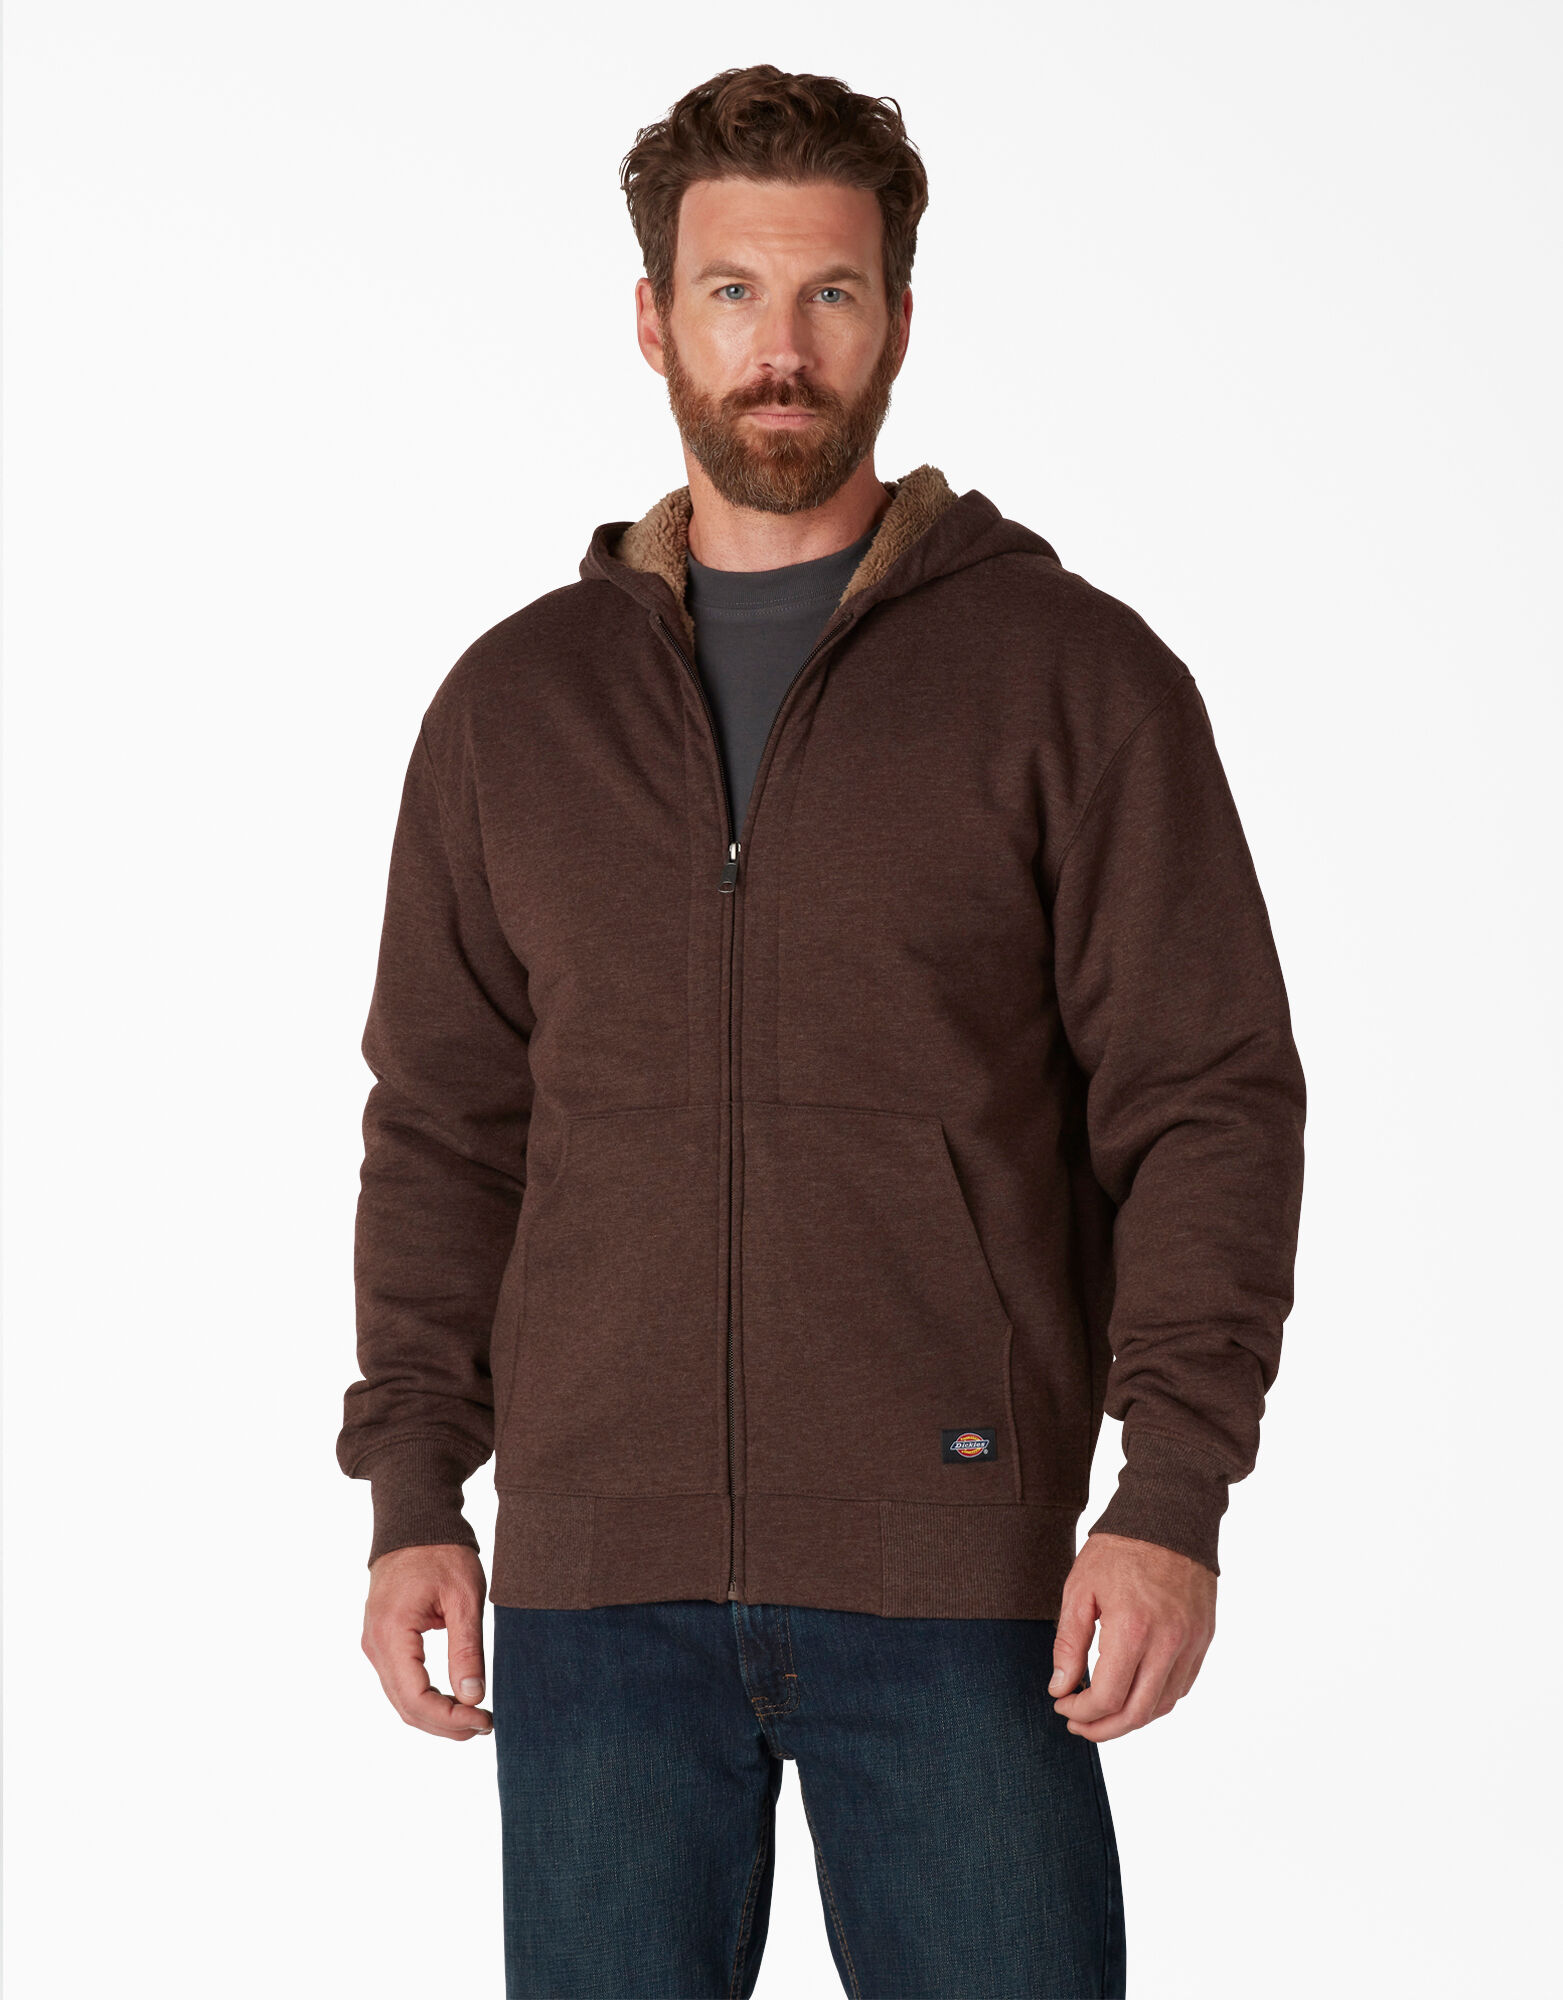 Men Full Zip Fleece Hoodie Sweatshirt Splicing Tie Dyeing Long Sleeve Soft Sherpa Lined Winter Jacket